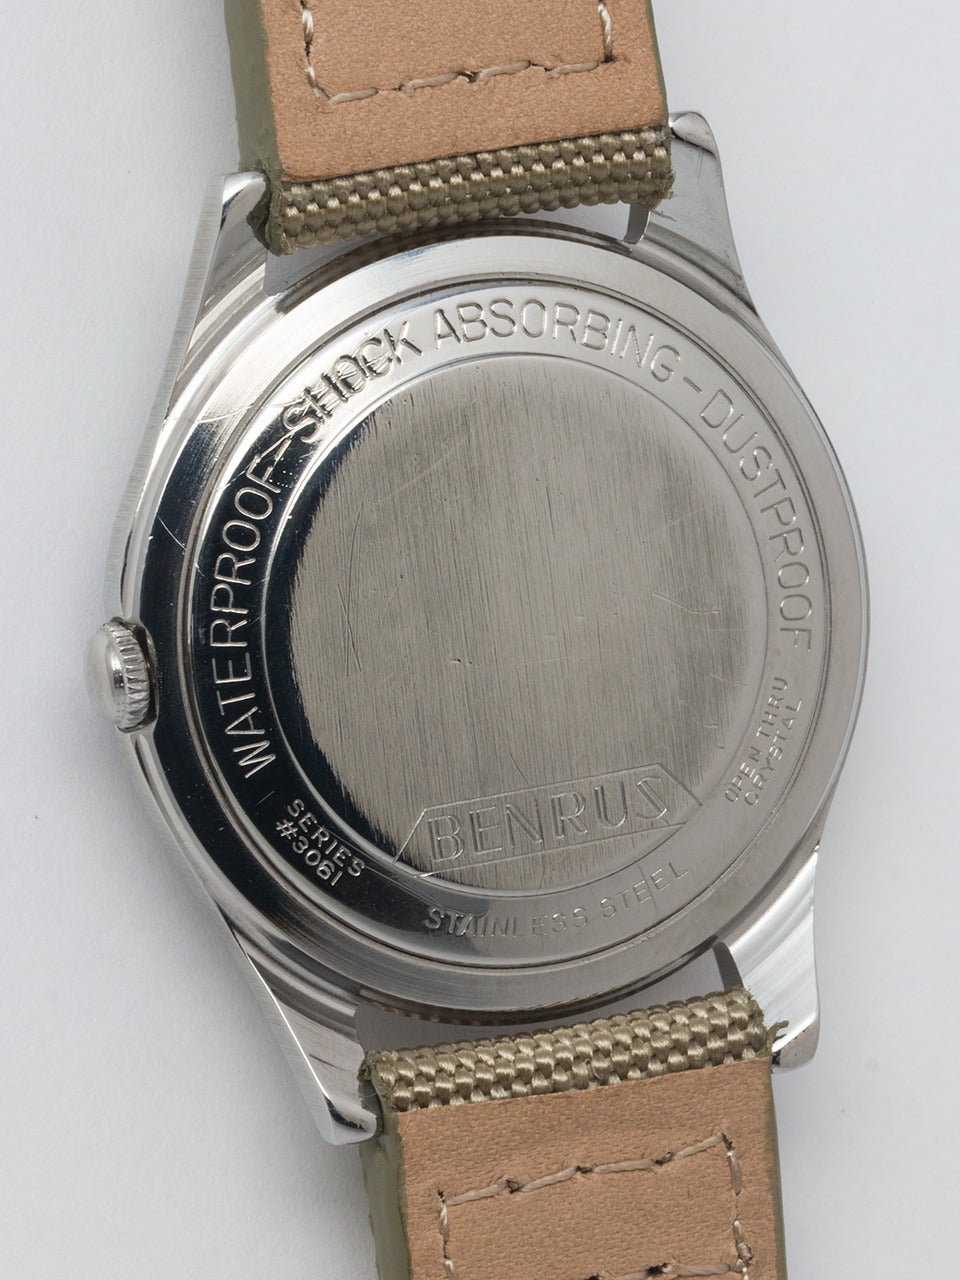 Men's Benrus Steel Military Wristwatch circa 1960s